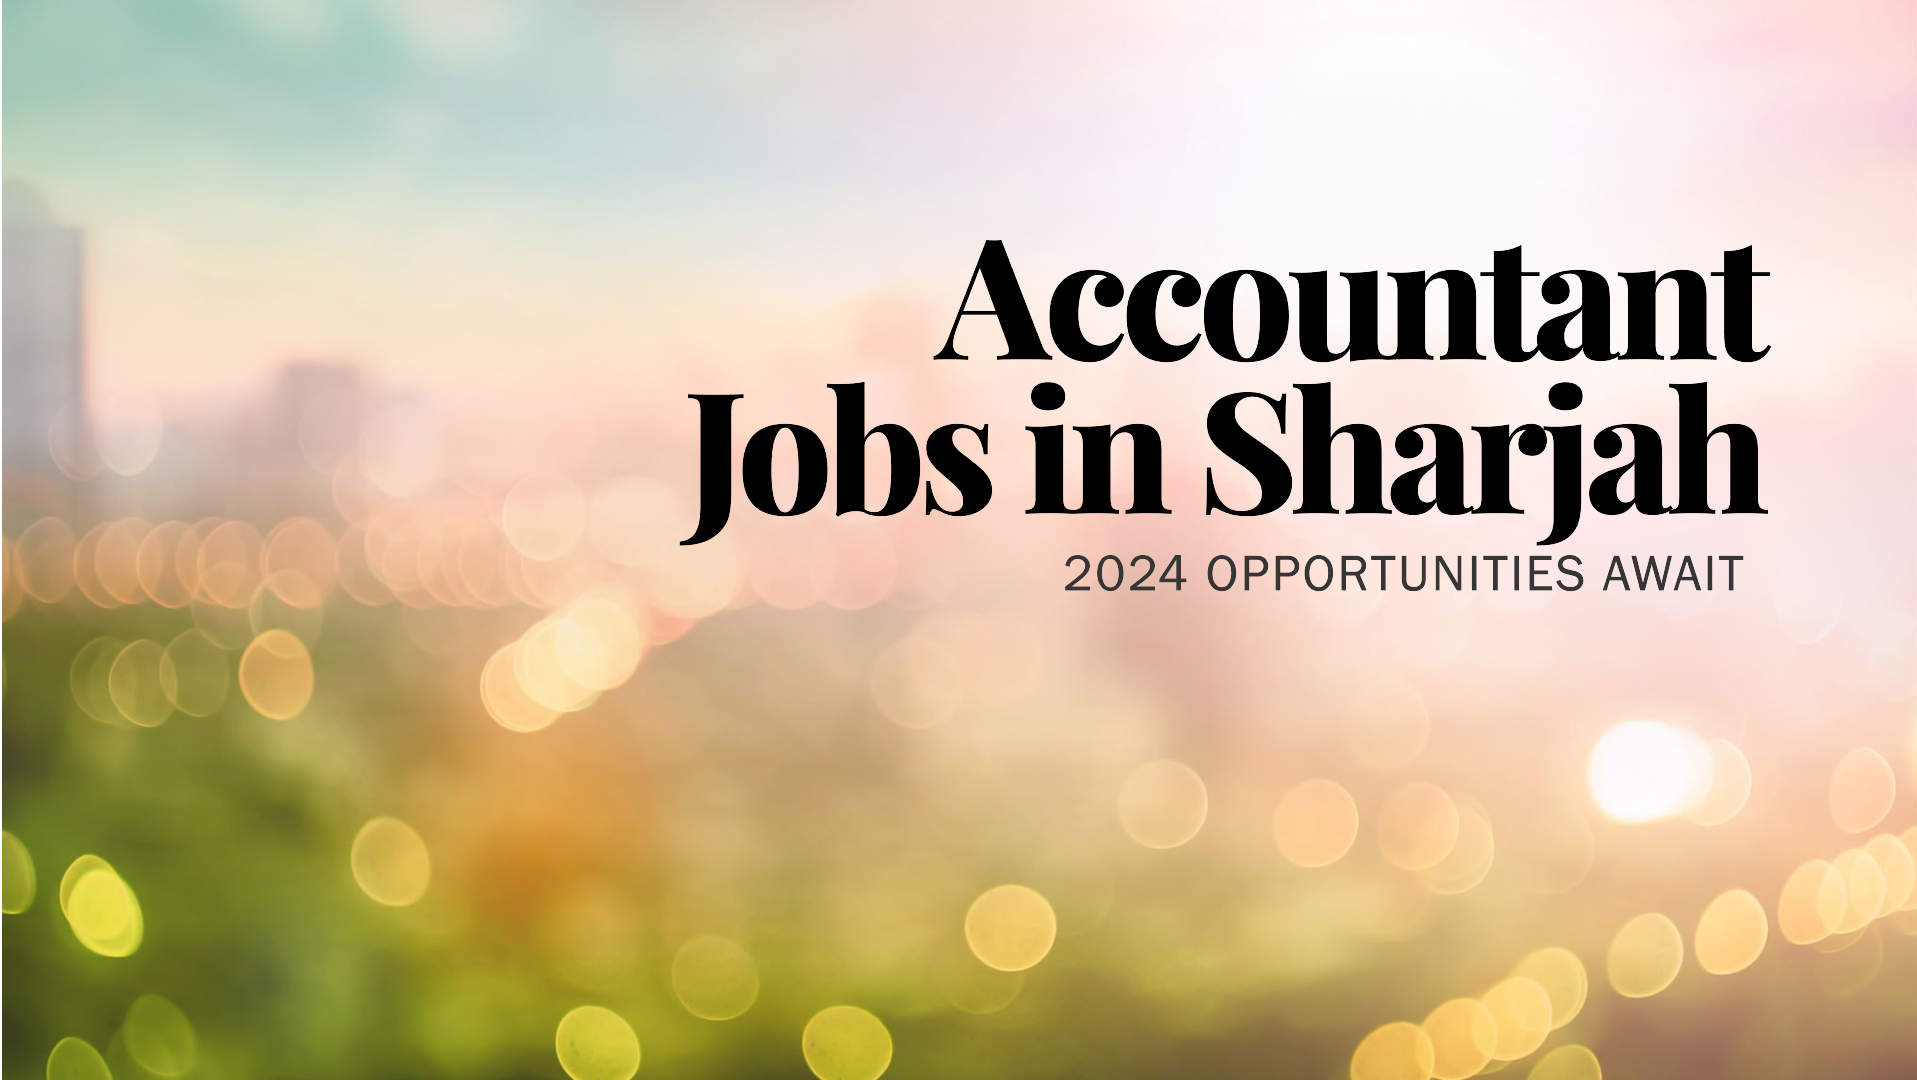 Accountant jobs in Sharjah 2024